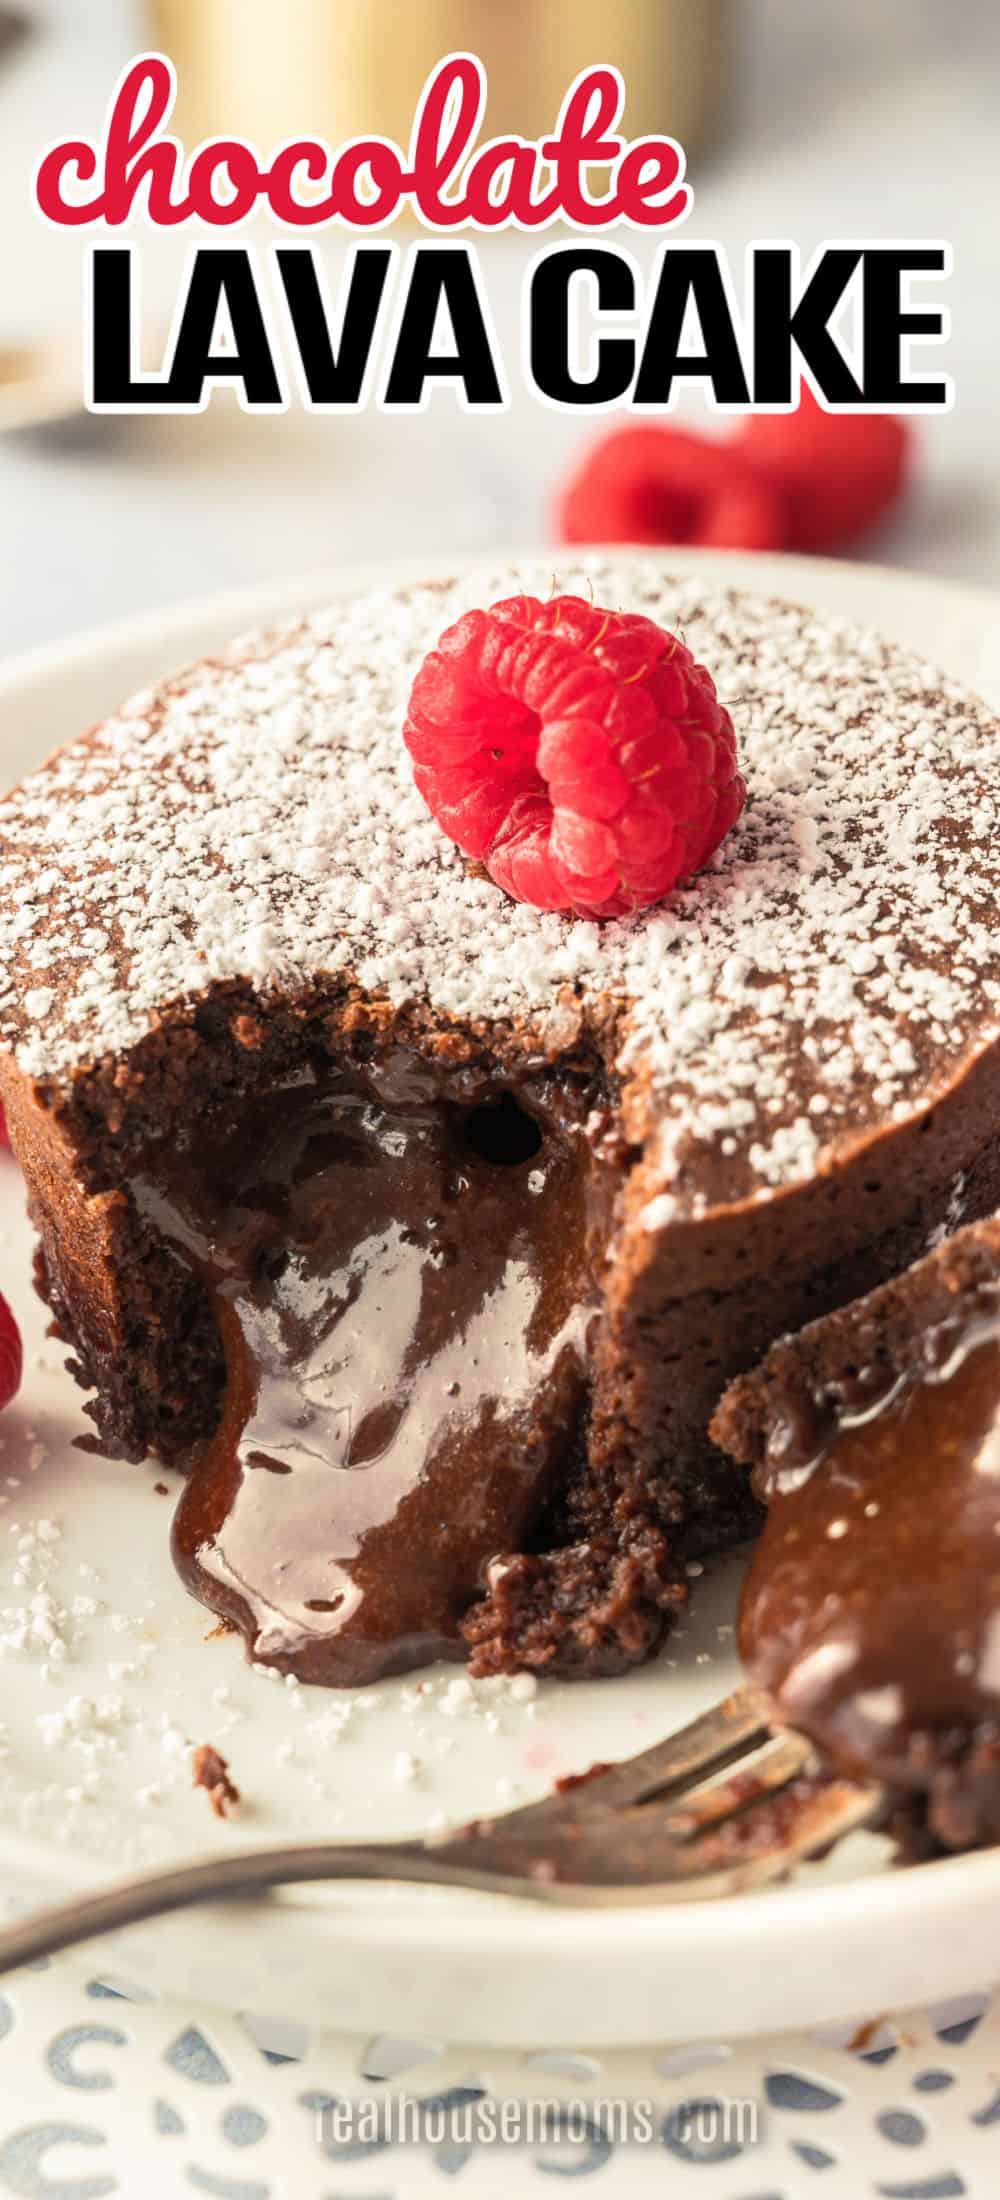 Chocolate Lava Cake ⋆ Real Housemoms